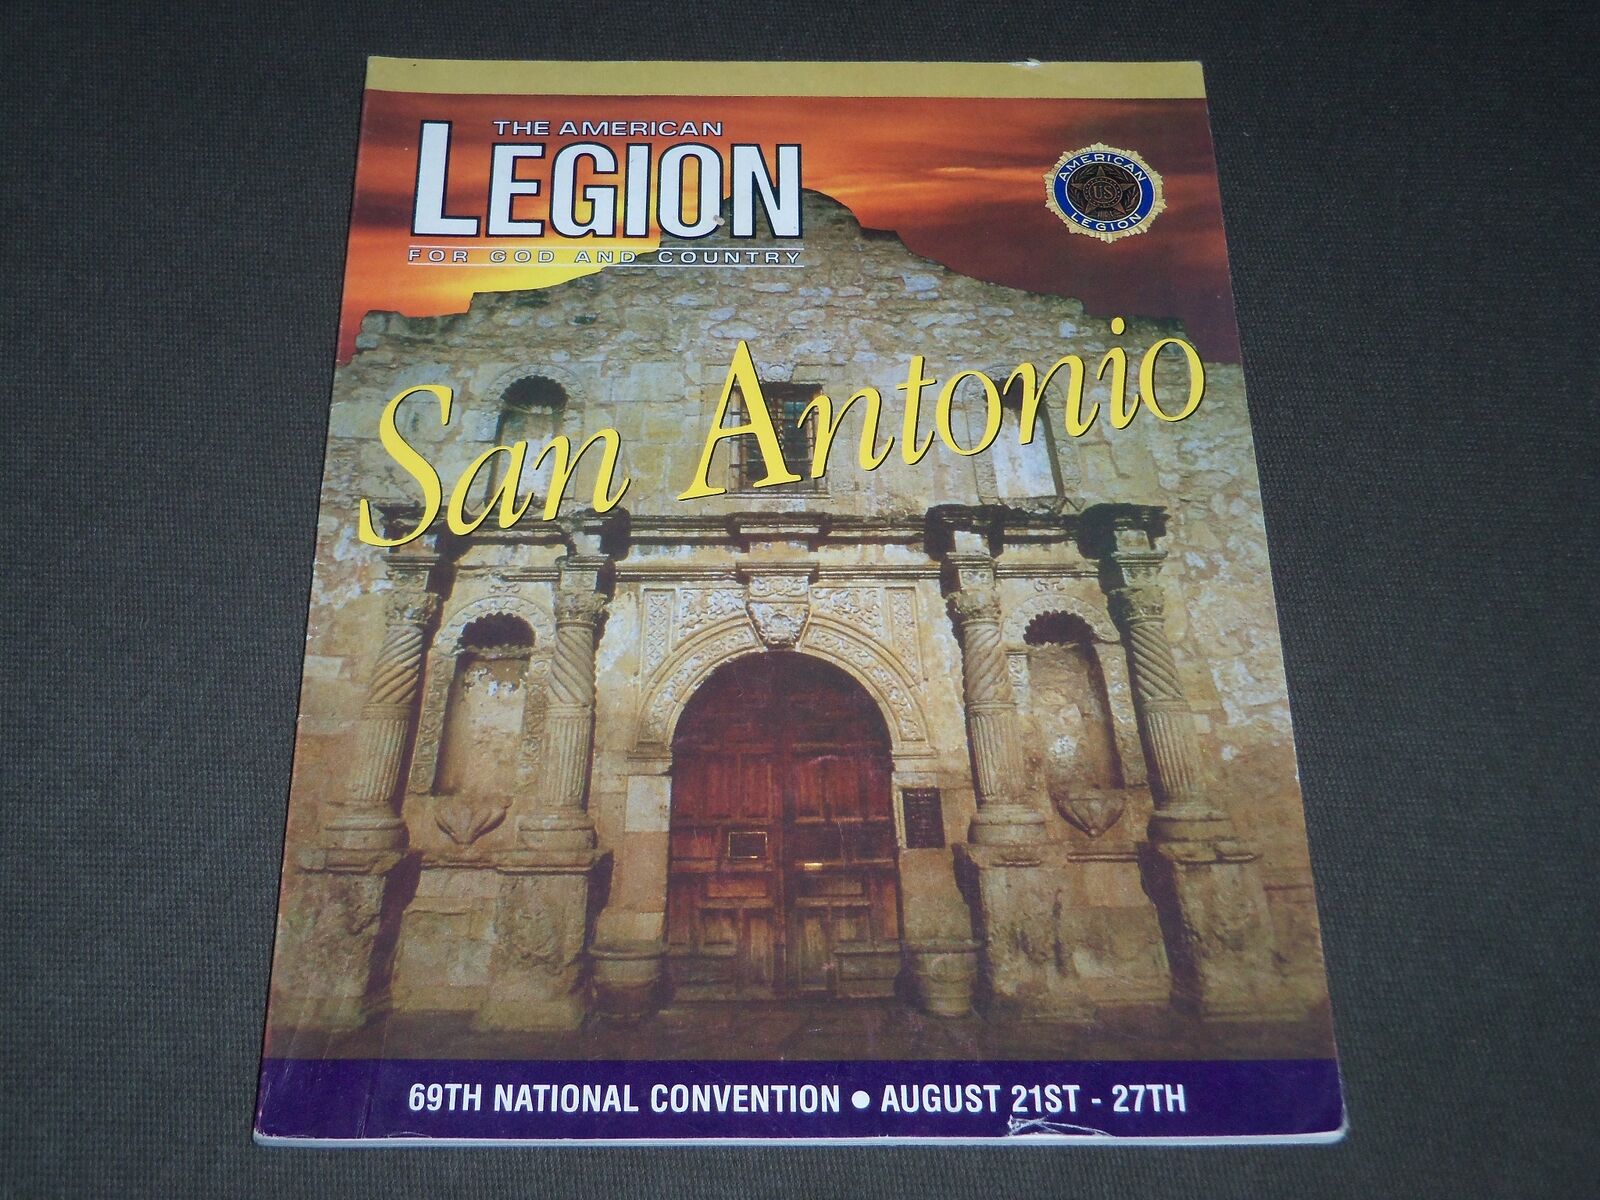 1987 THE AMERICAN LEGION 69TH NATIONAL CONVENTION PROGRAM - SAN ANTONIO - J 2720